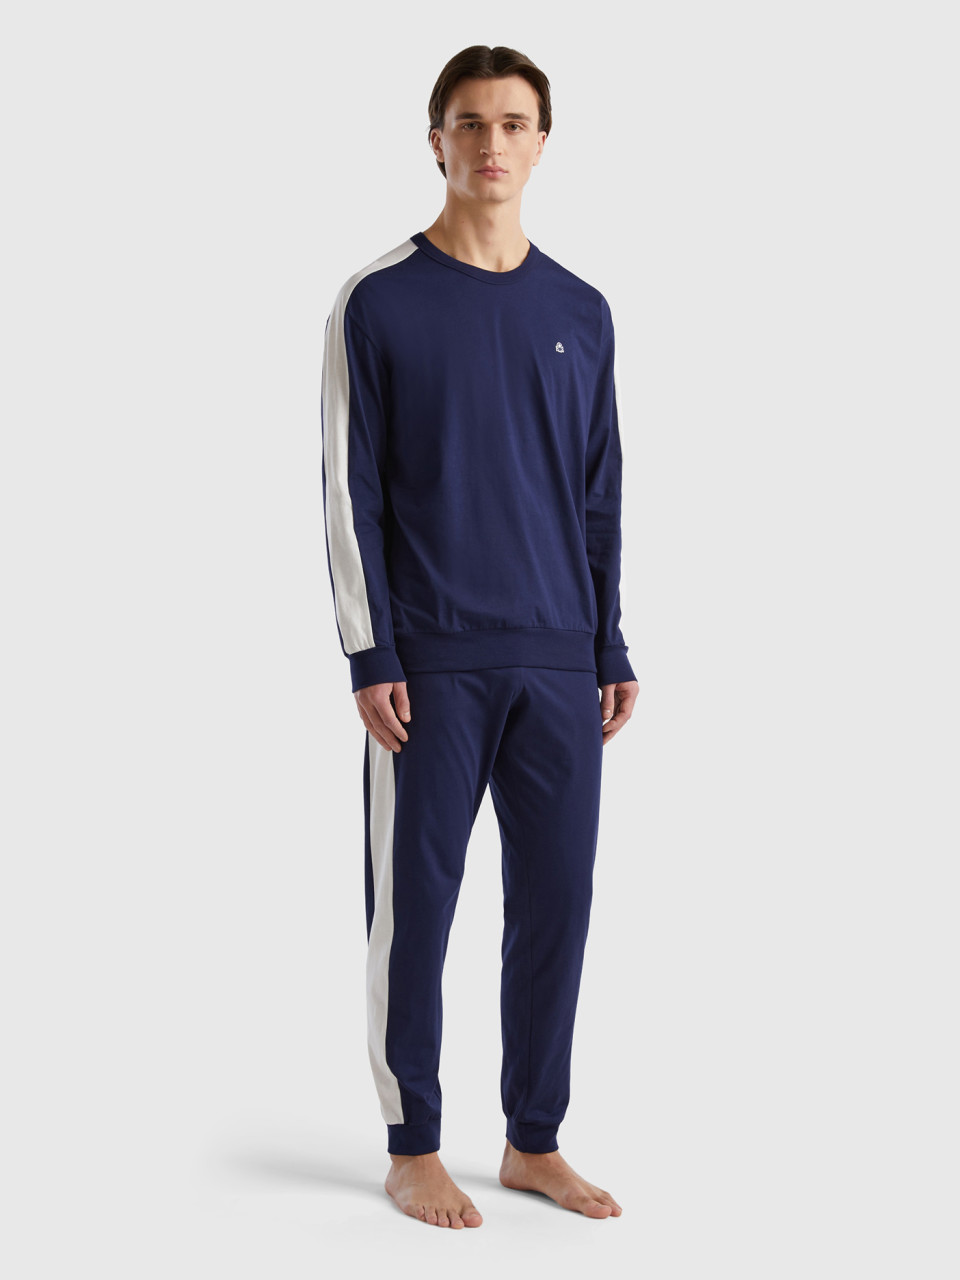 Benetton, Pyjamas With Side Stripes, Dark Blue, Men